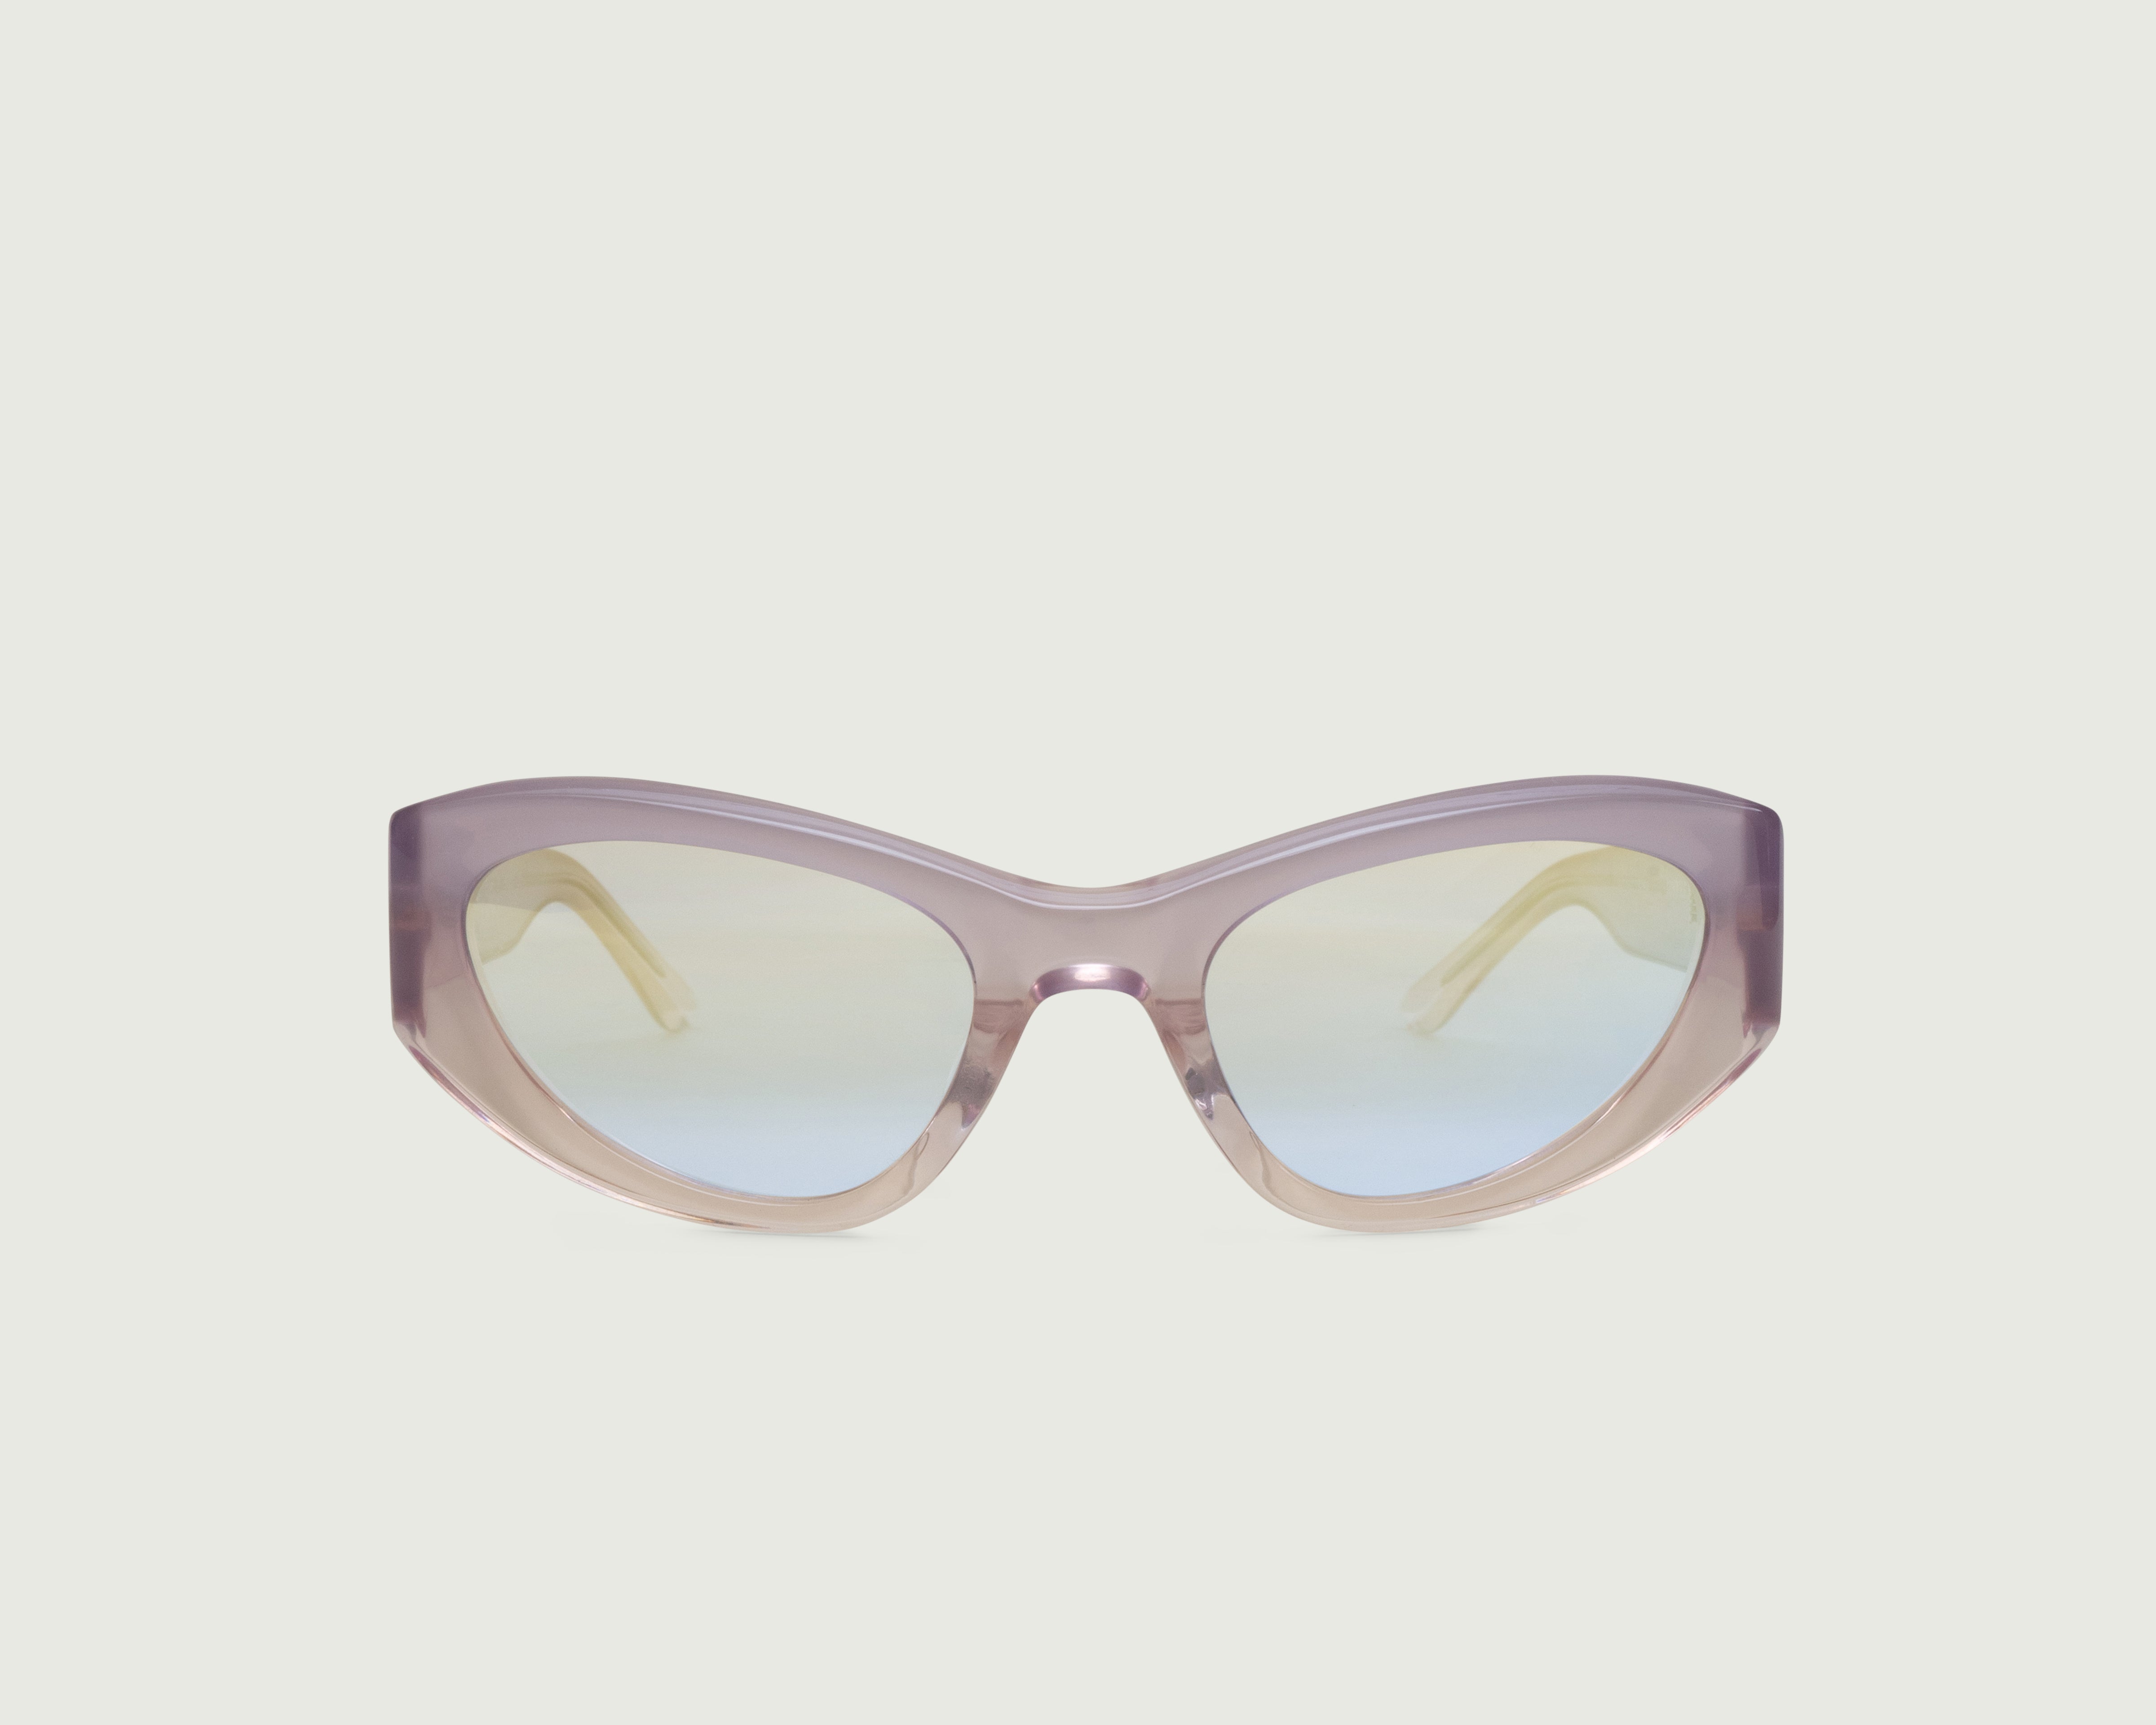 Twilight::Sol Sunglasses cateye purple acetate front